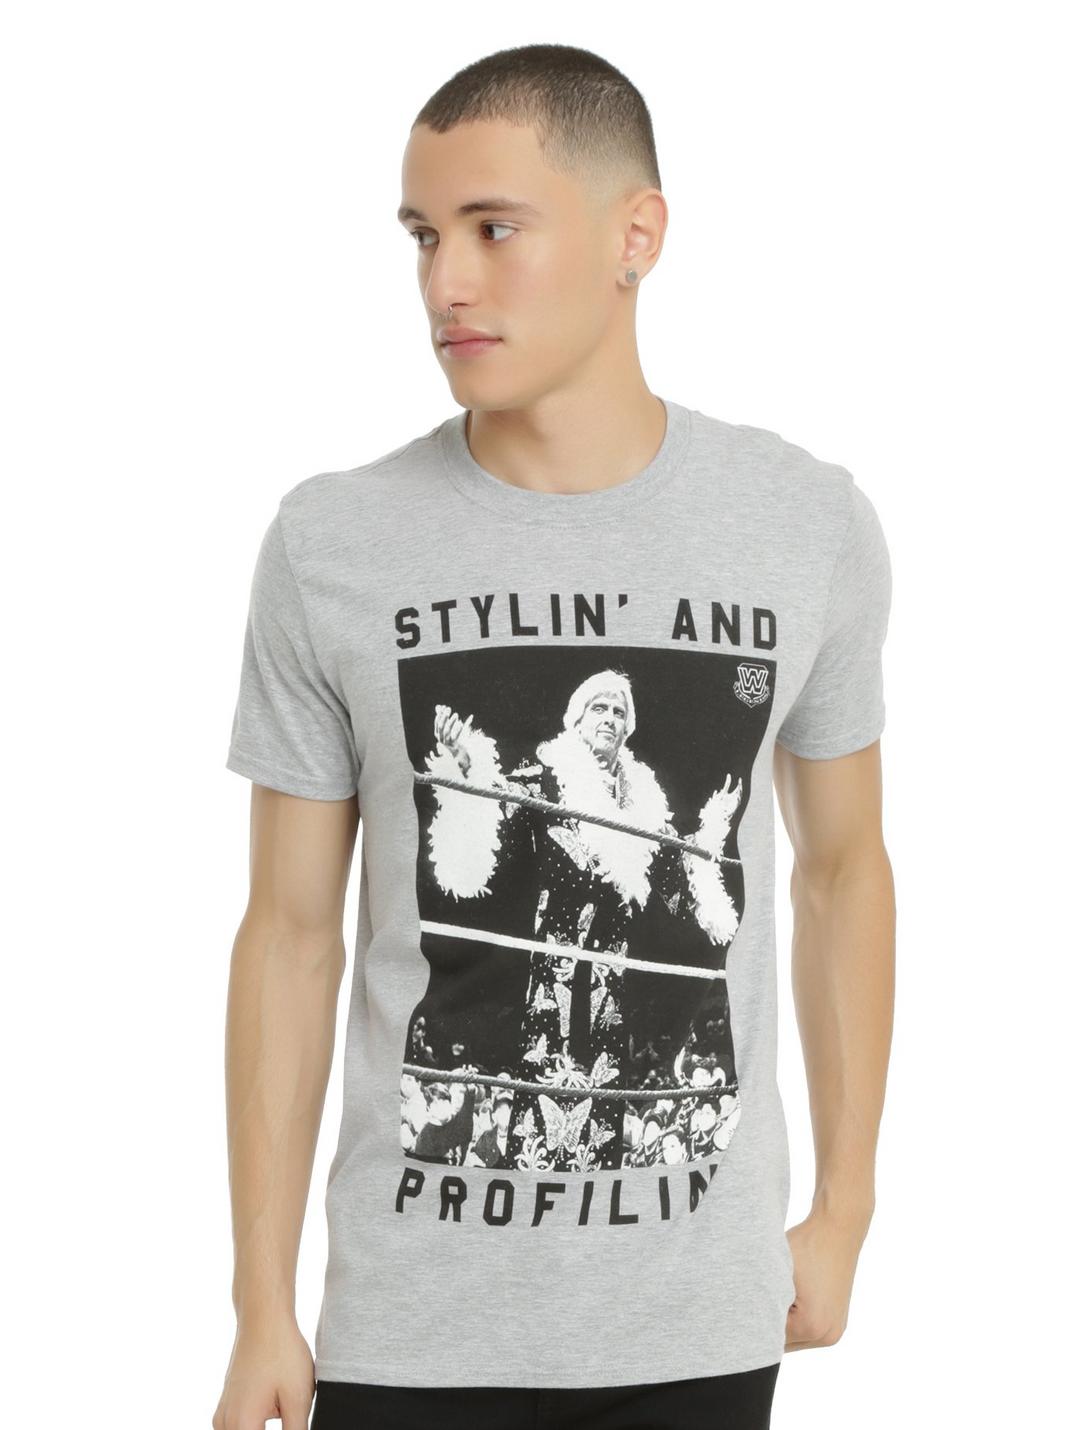 WWE Legends Ric Flair Stylin' And Profilin' T-Shirt, GREY, hi-res